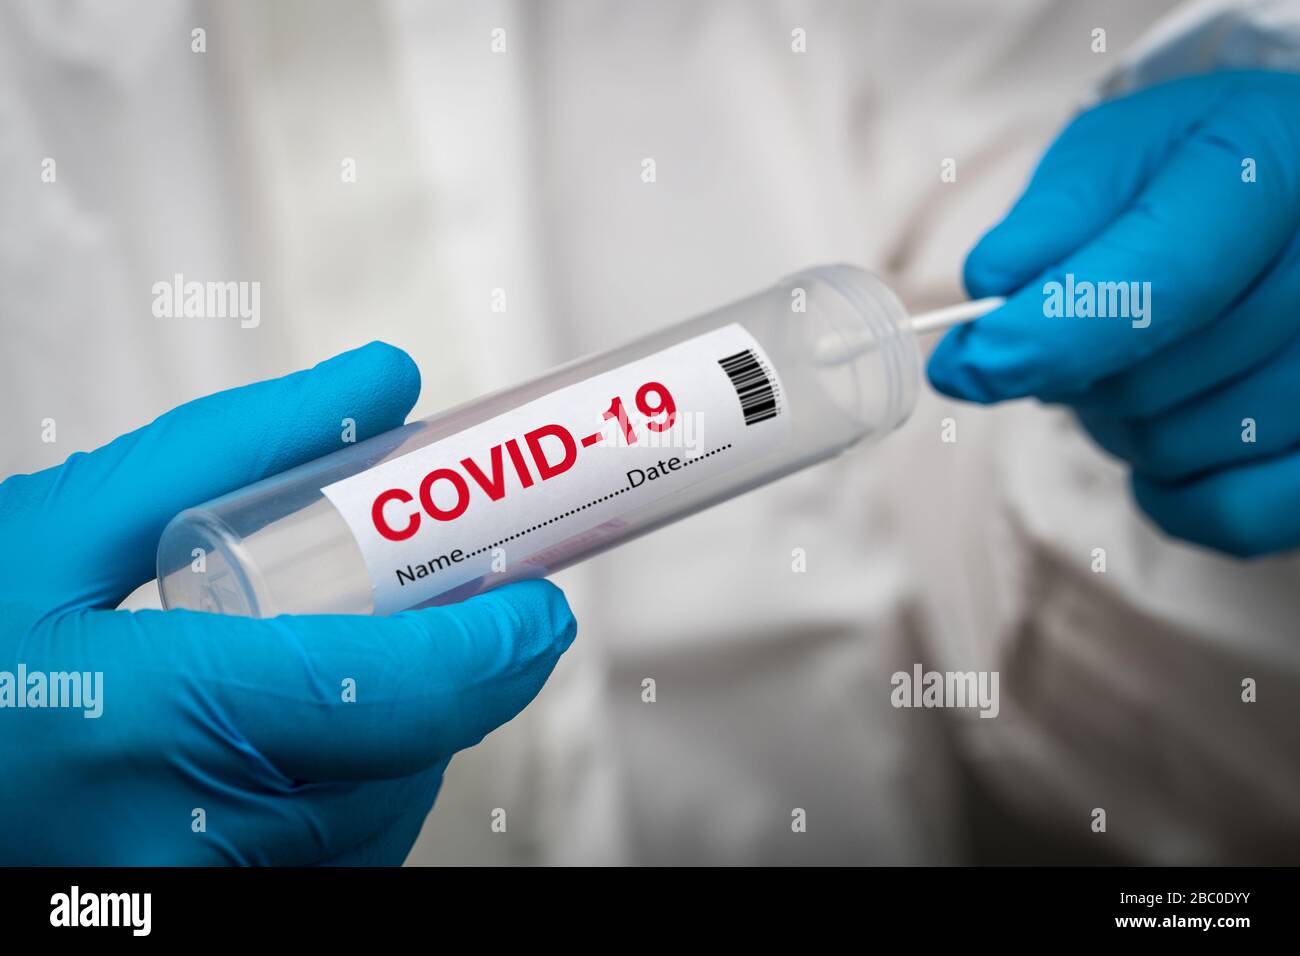 Covid-19 swab test. Stock Photo